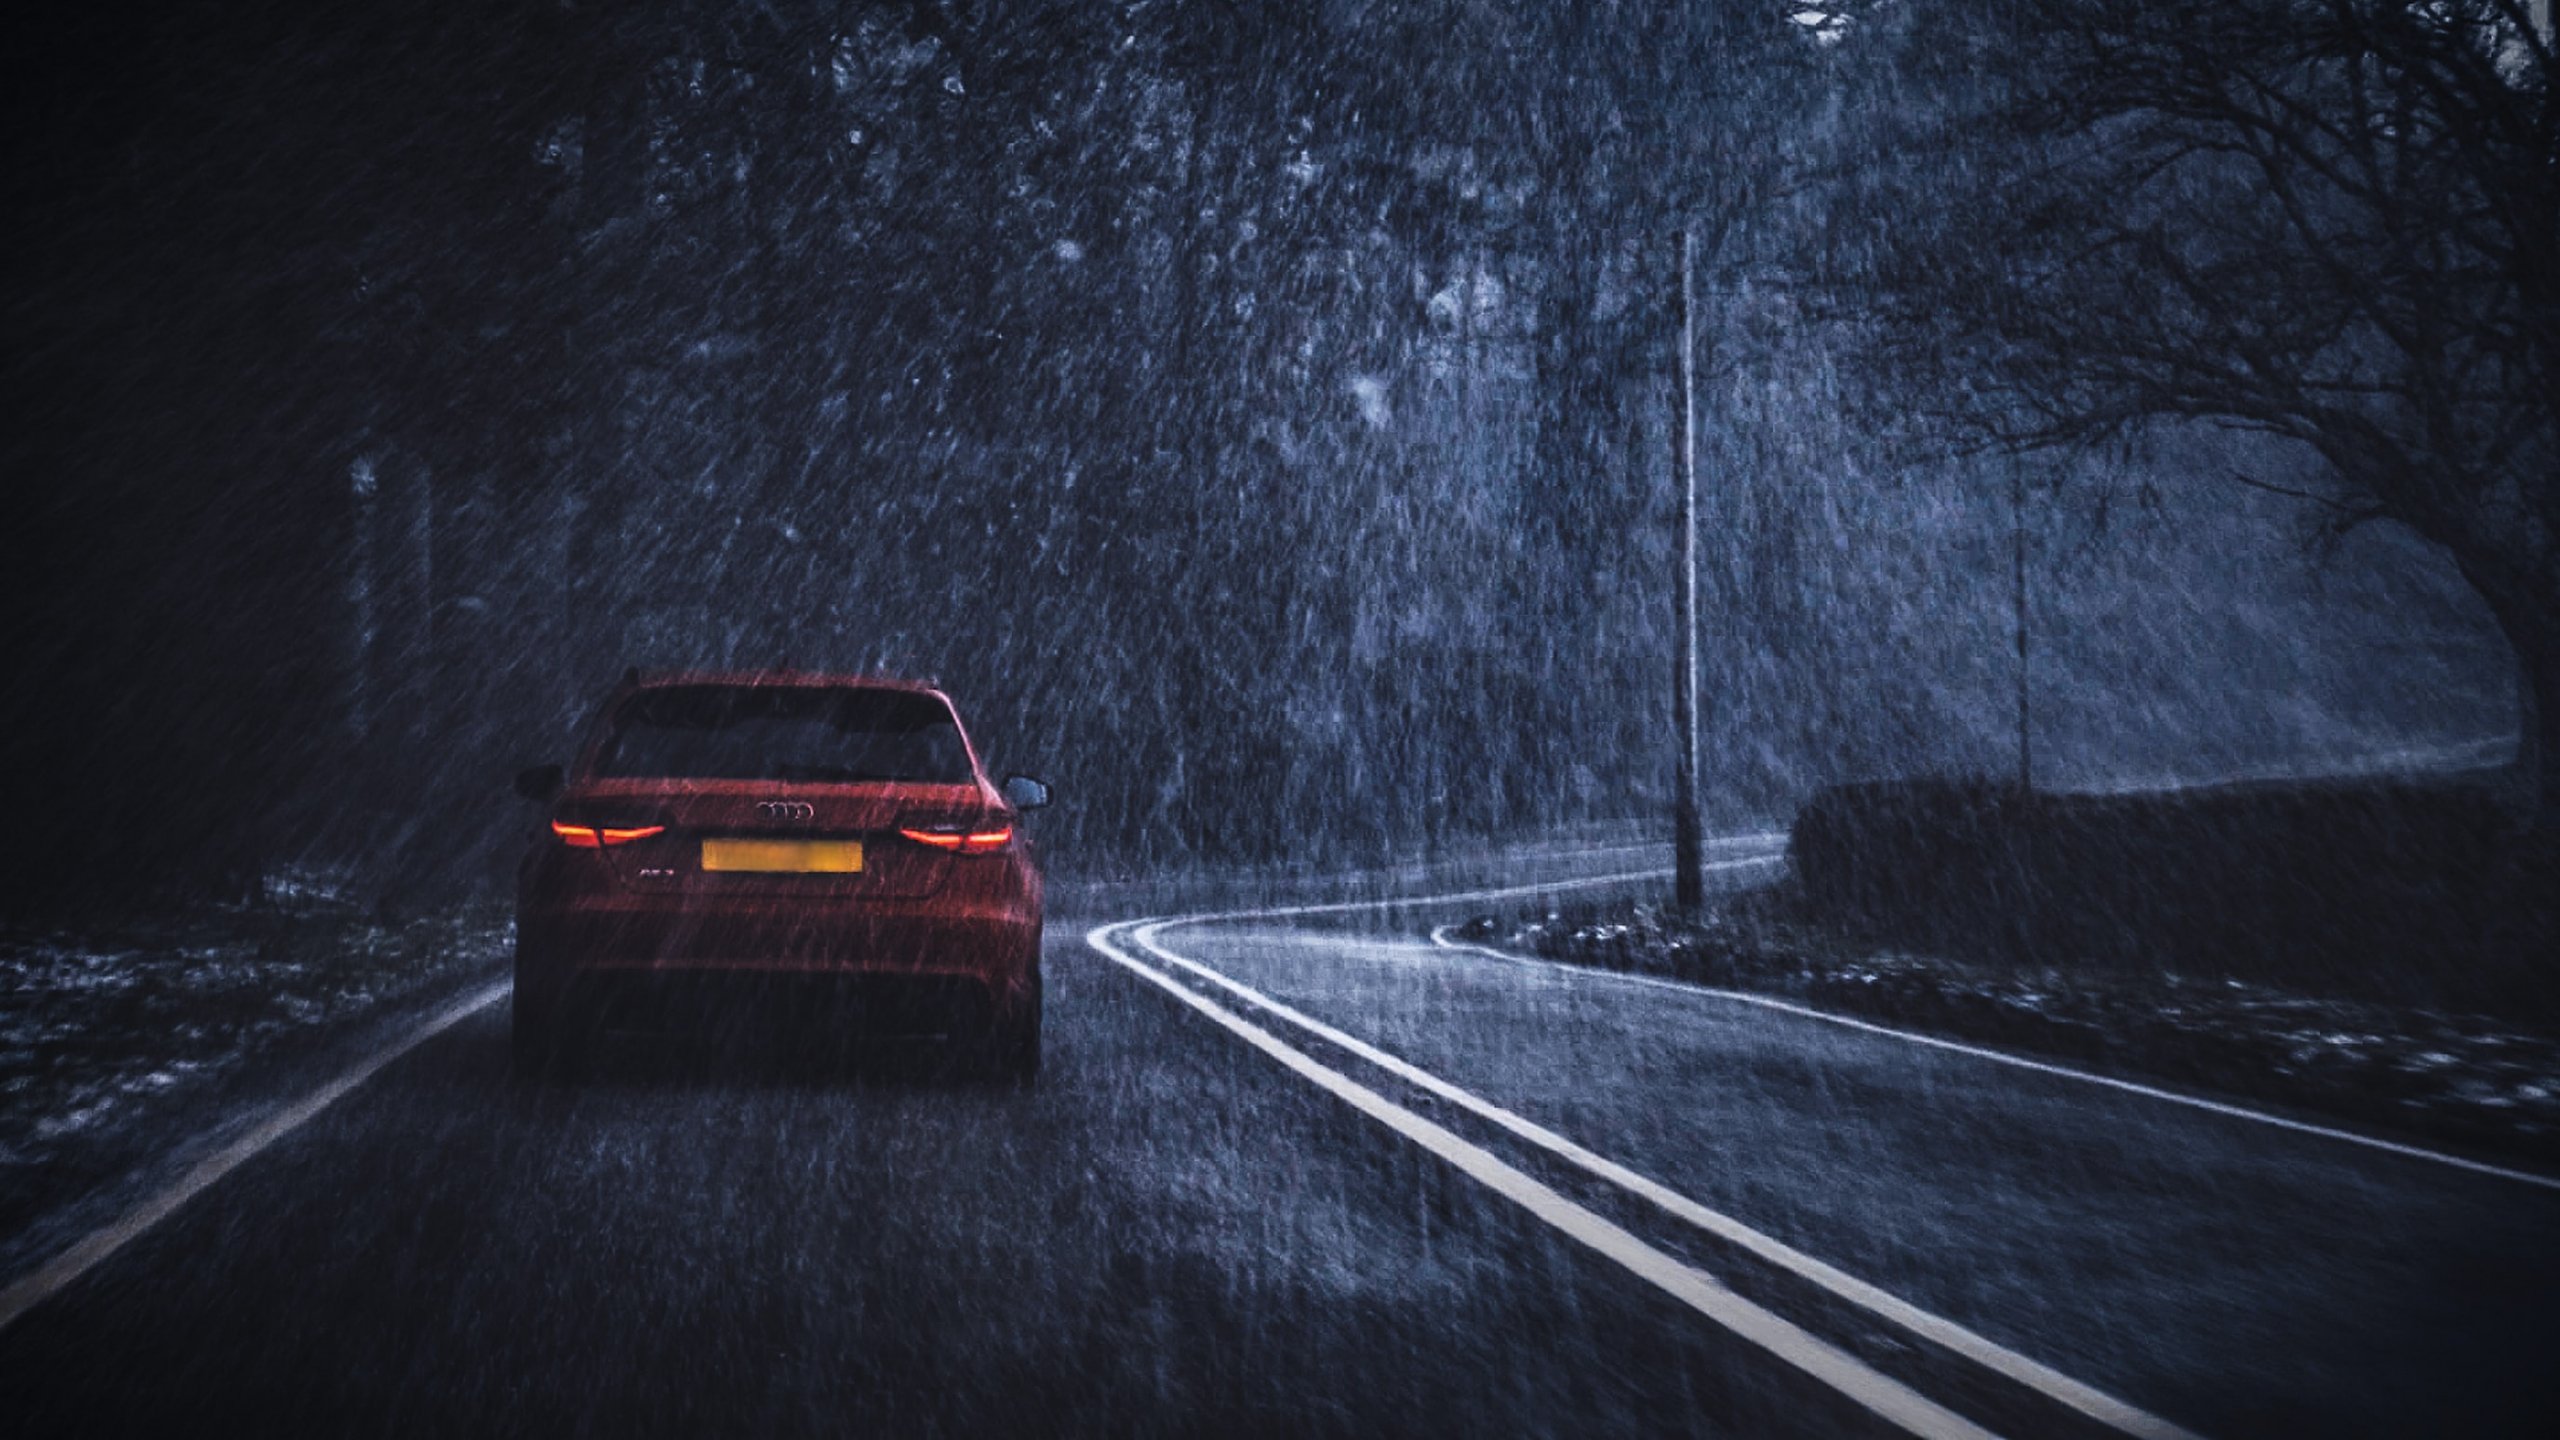 Driver rain. Машина под дождем. Машина ночь дождь. Машина ночью на дороге. Дорога дождь машина.